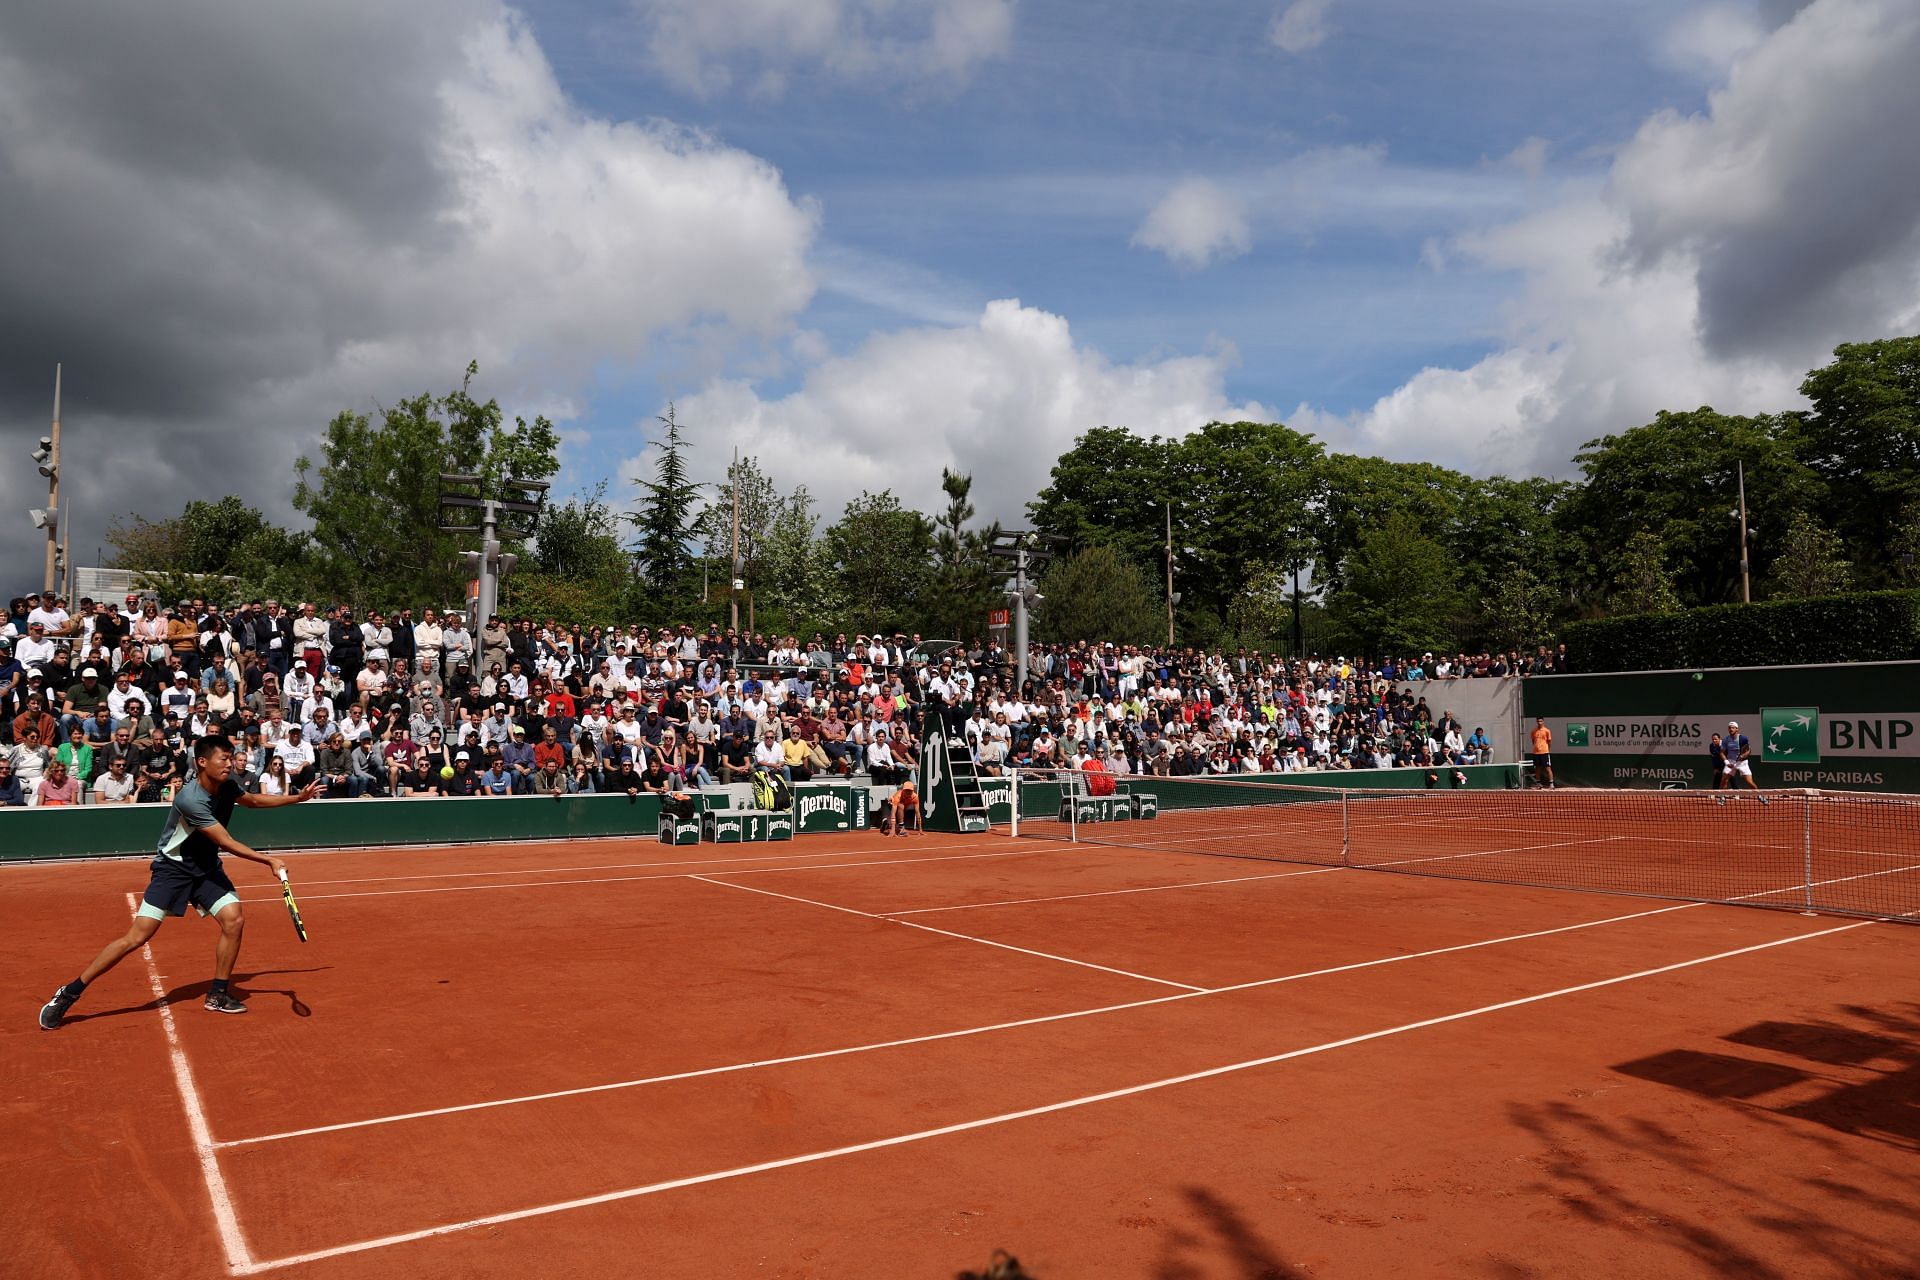 Joao Sousa vs Tseng at the 2022 French Open